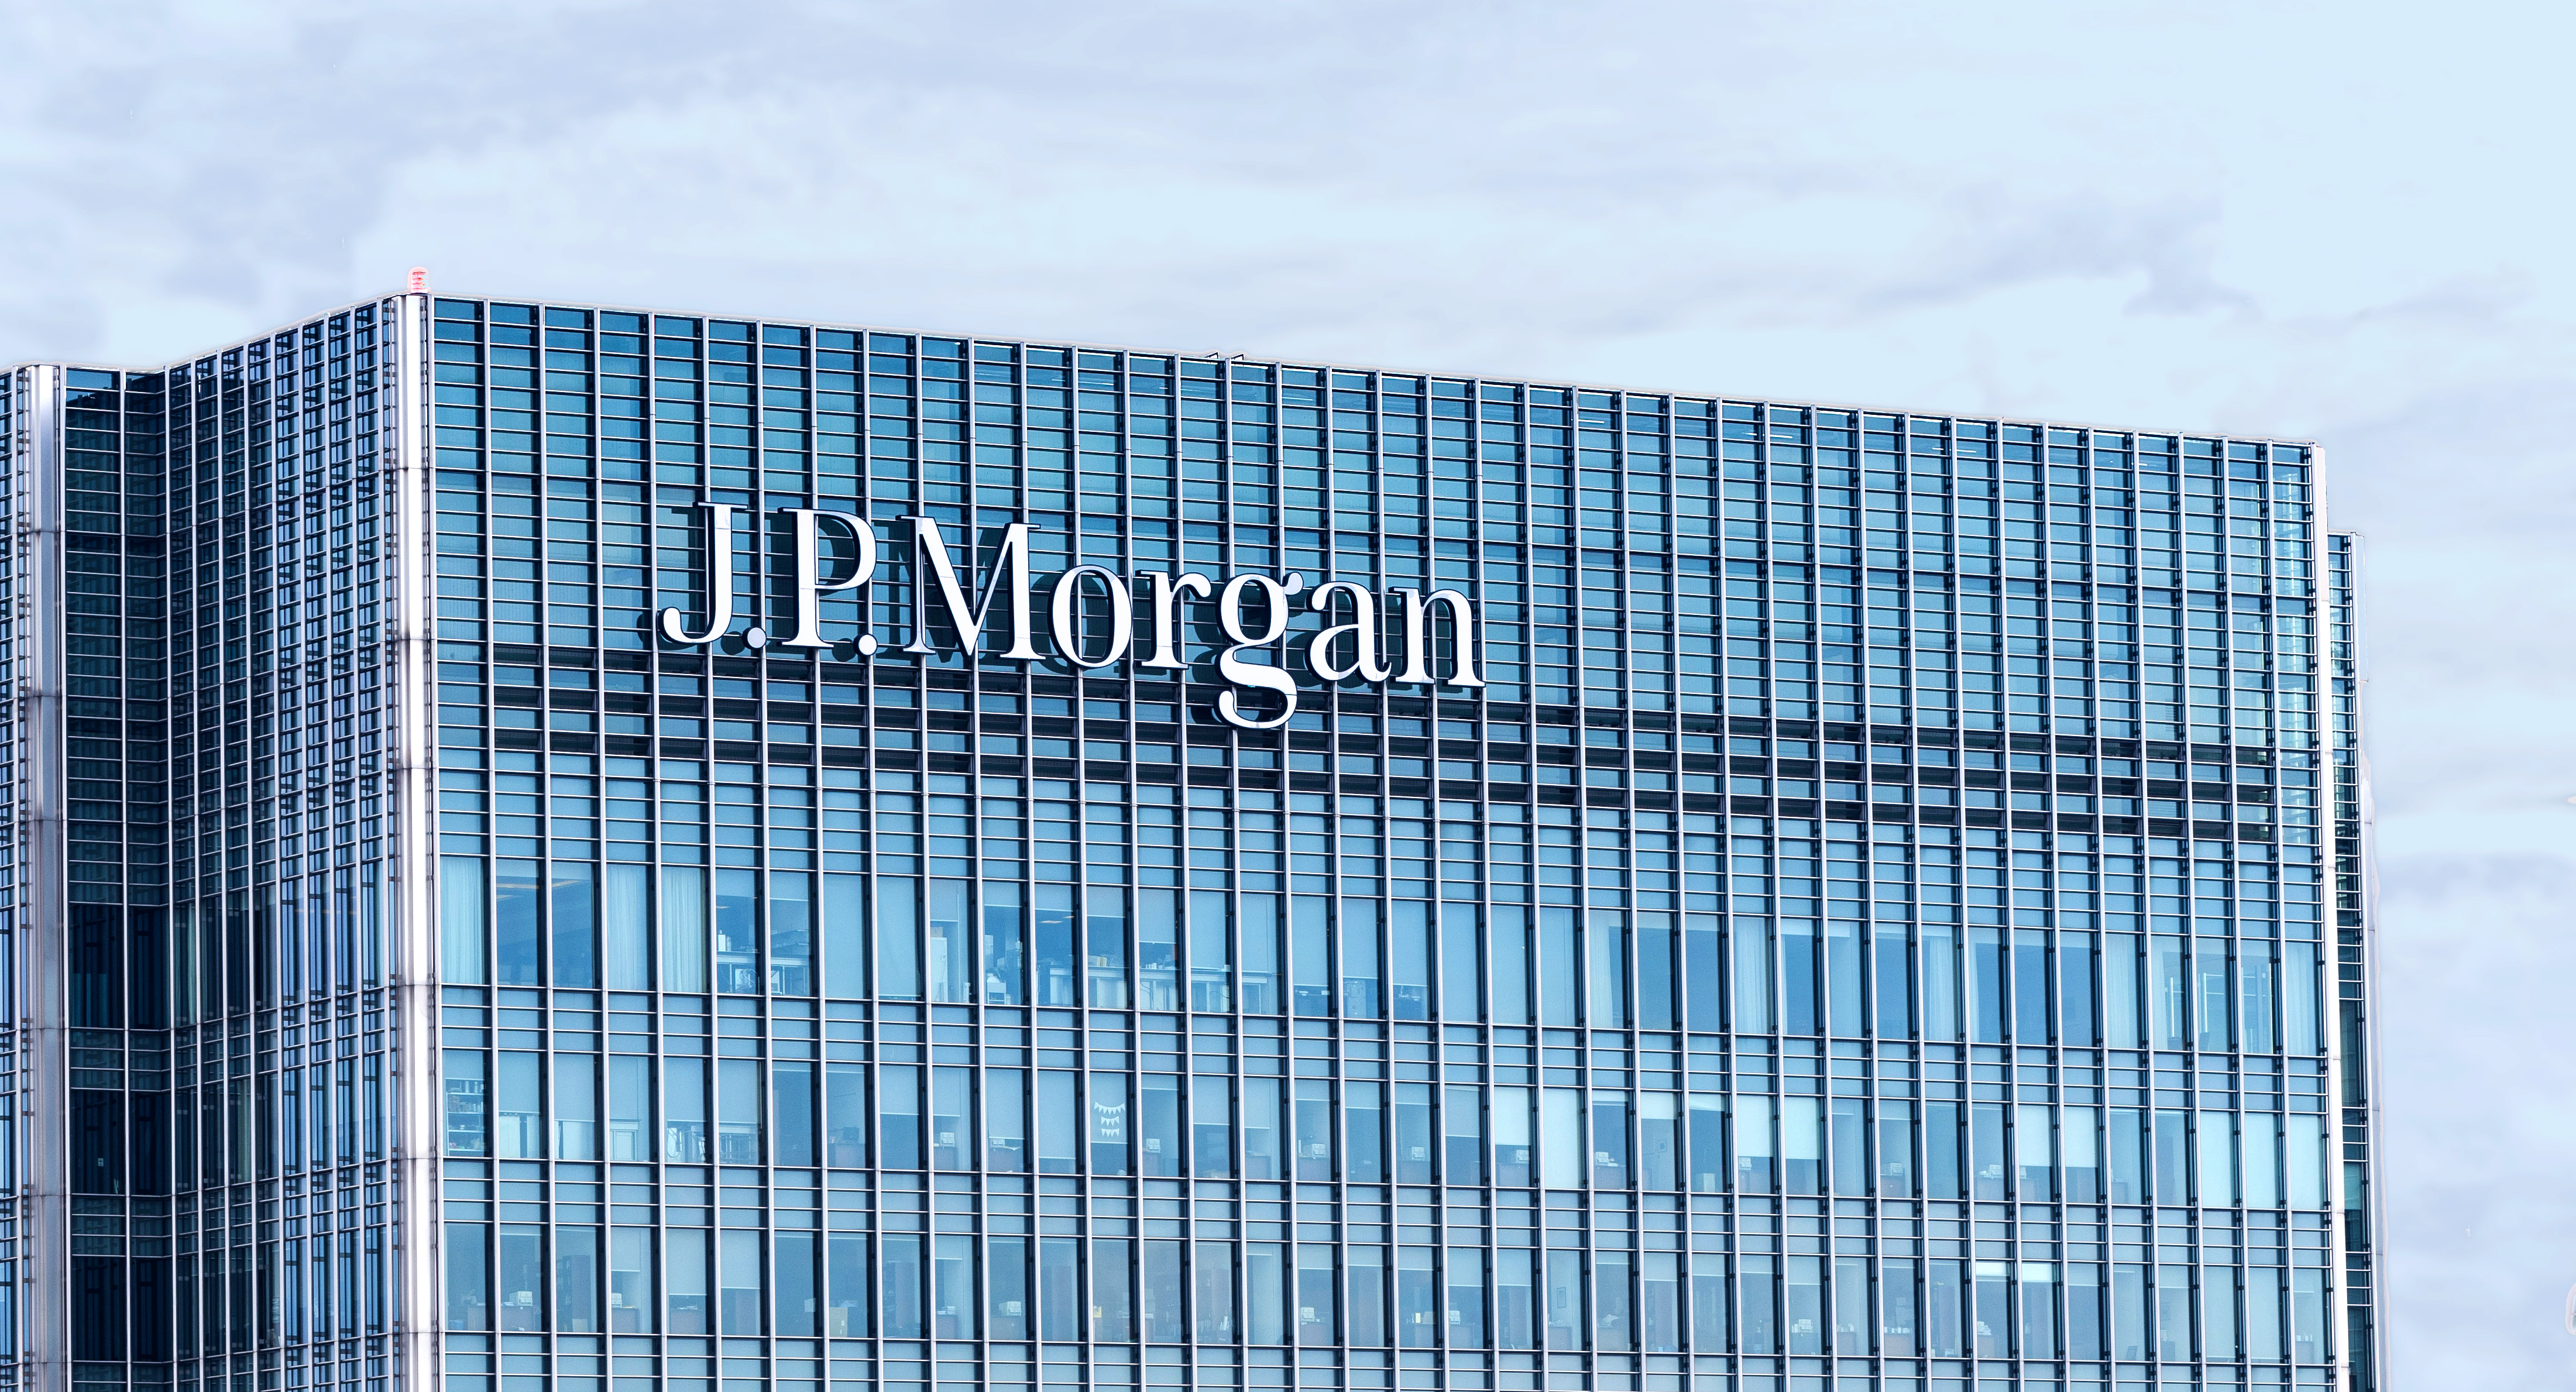 JP Morgan'dan yatırımcılara TL tavsiyesi